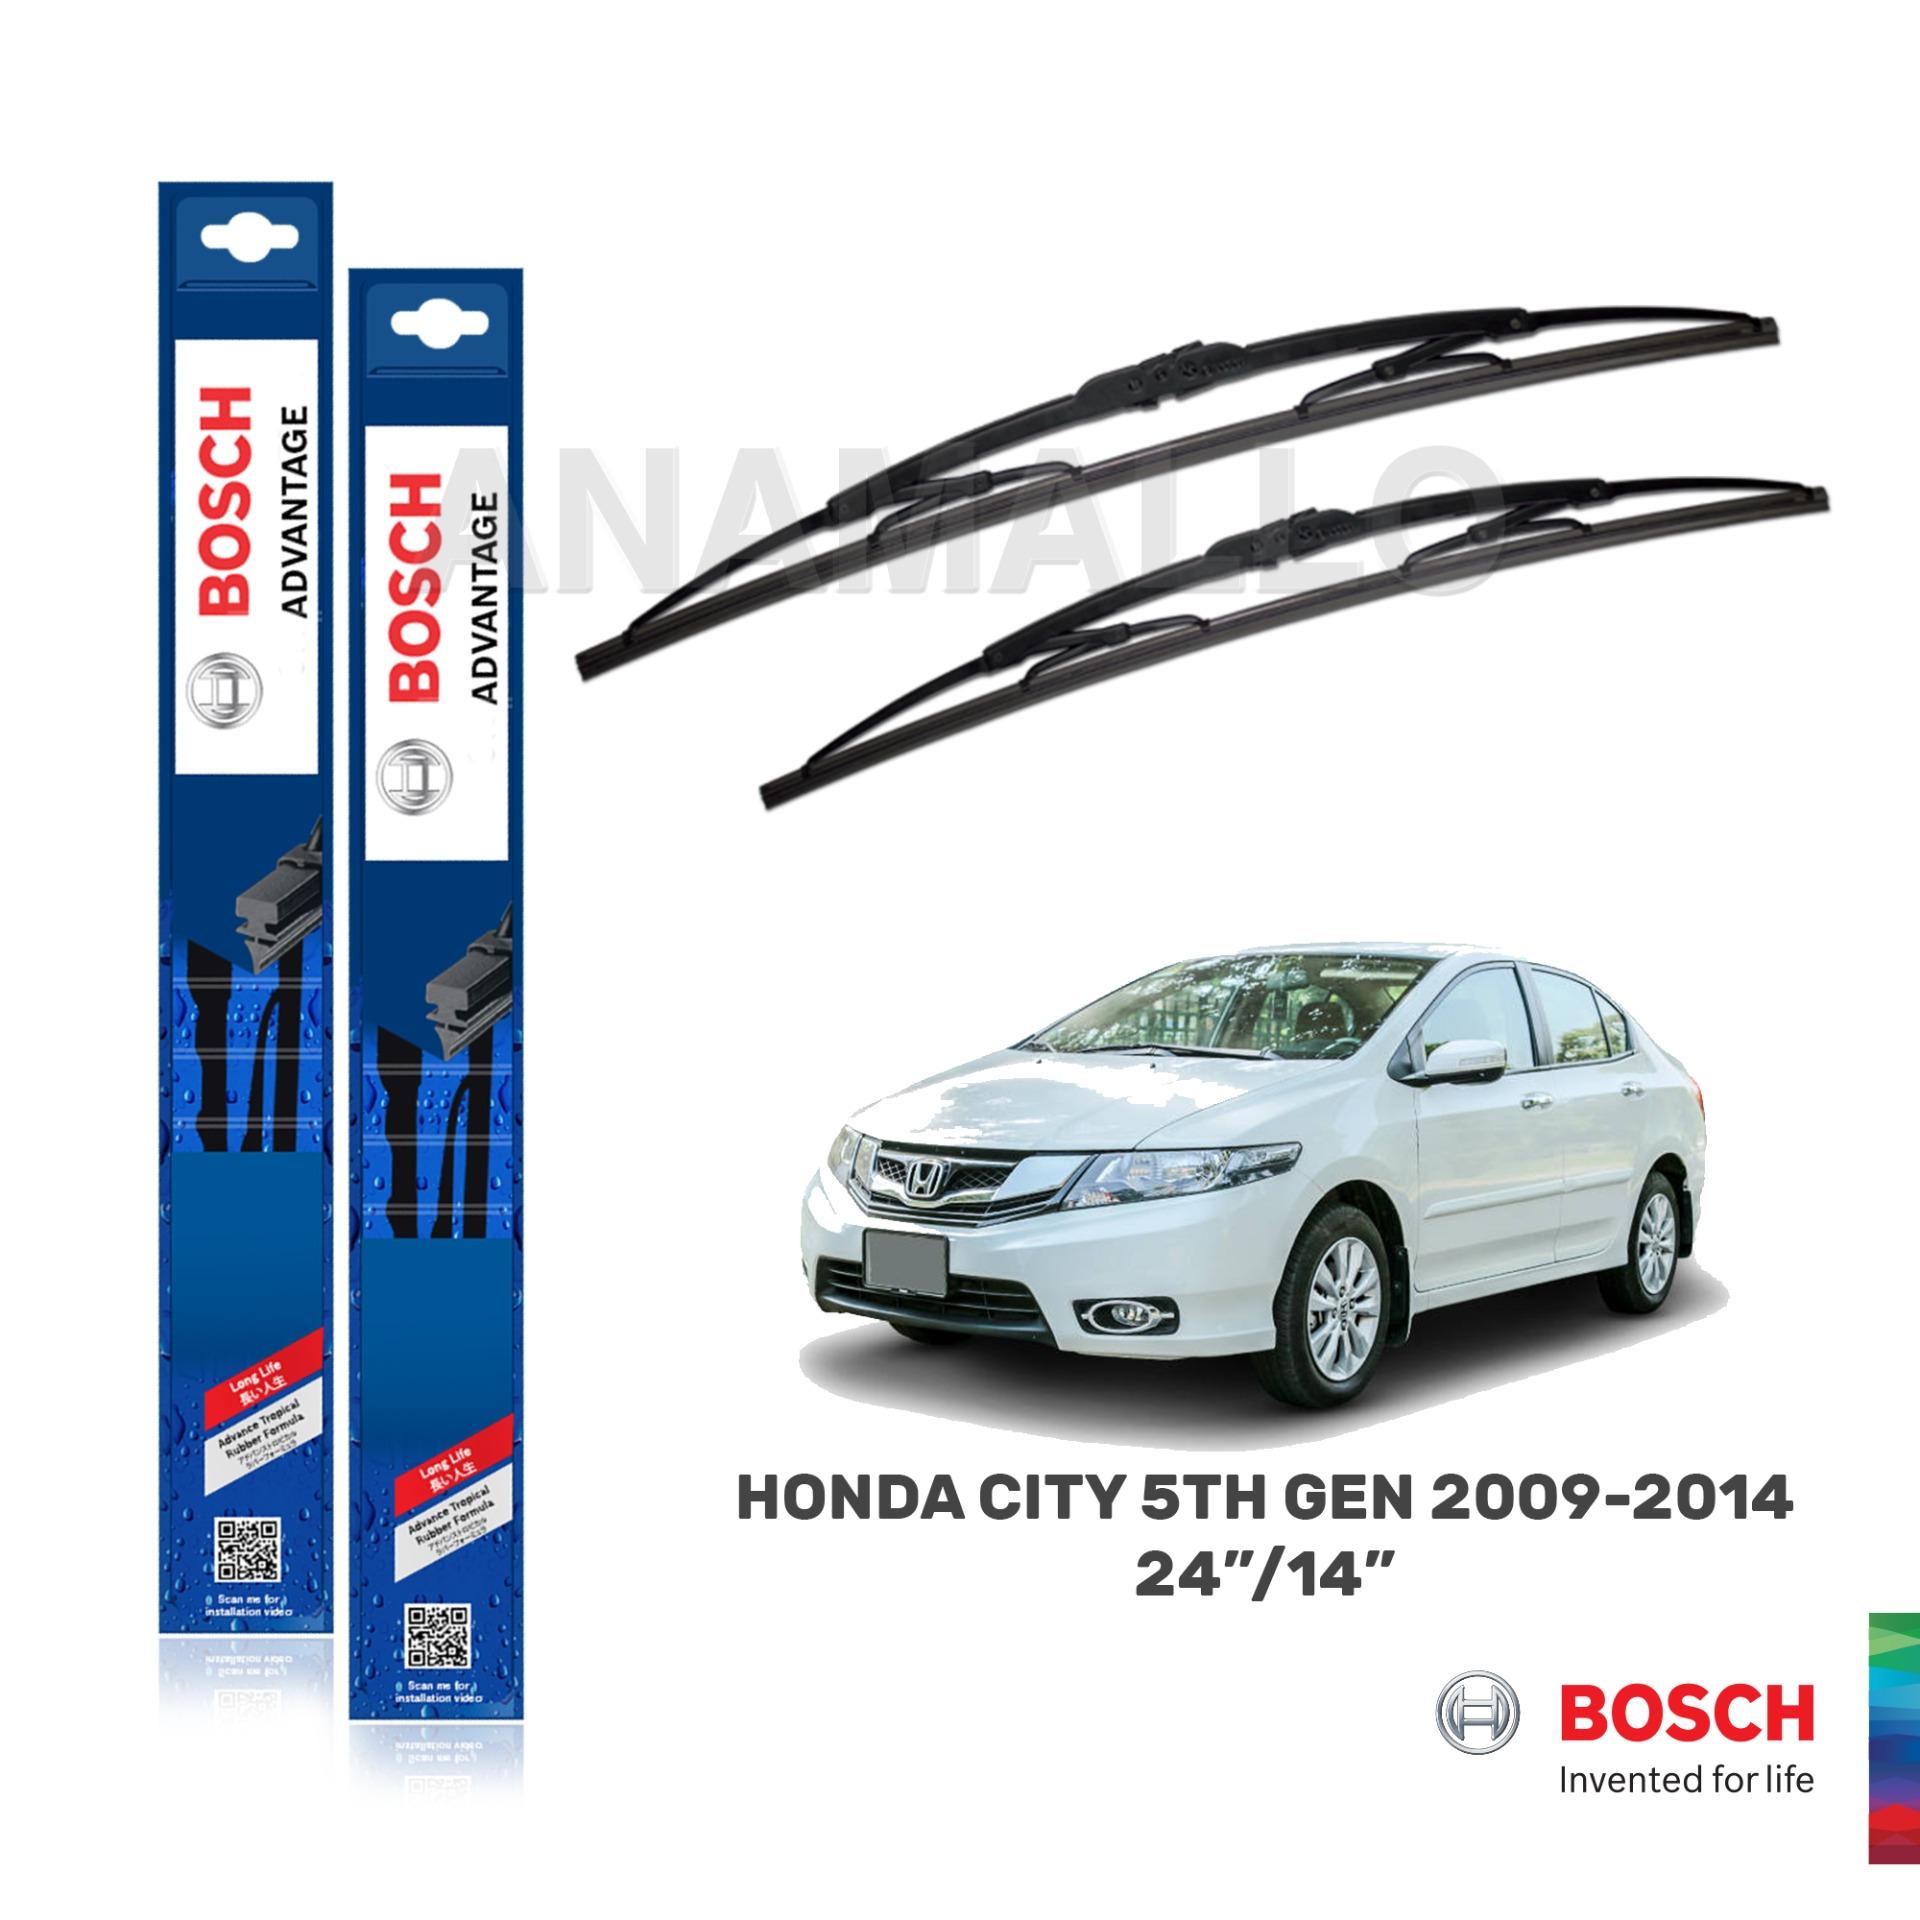 Honda Civic 2015 Windshield Wipers Size - Honda Civic 2015 Honda Civic Sedan Windshield Wiper Size